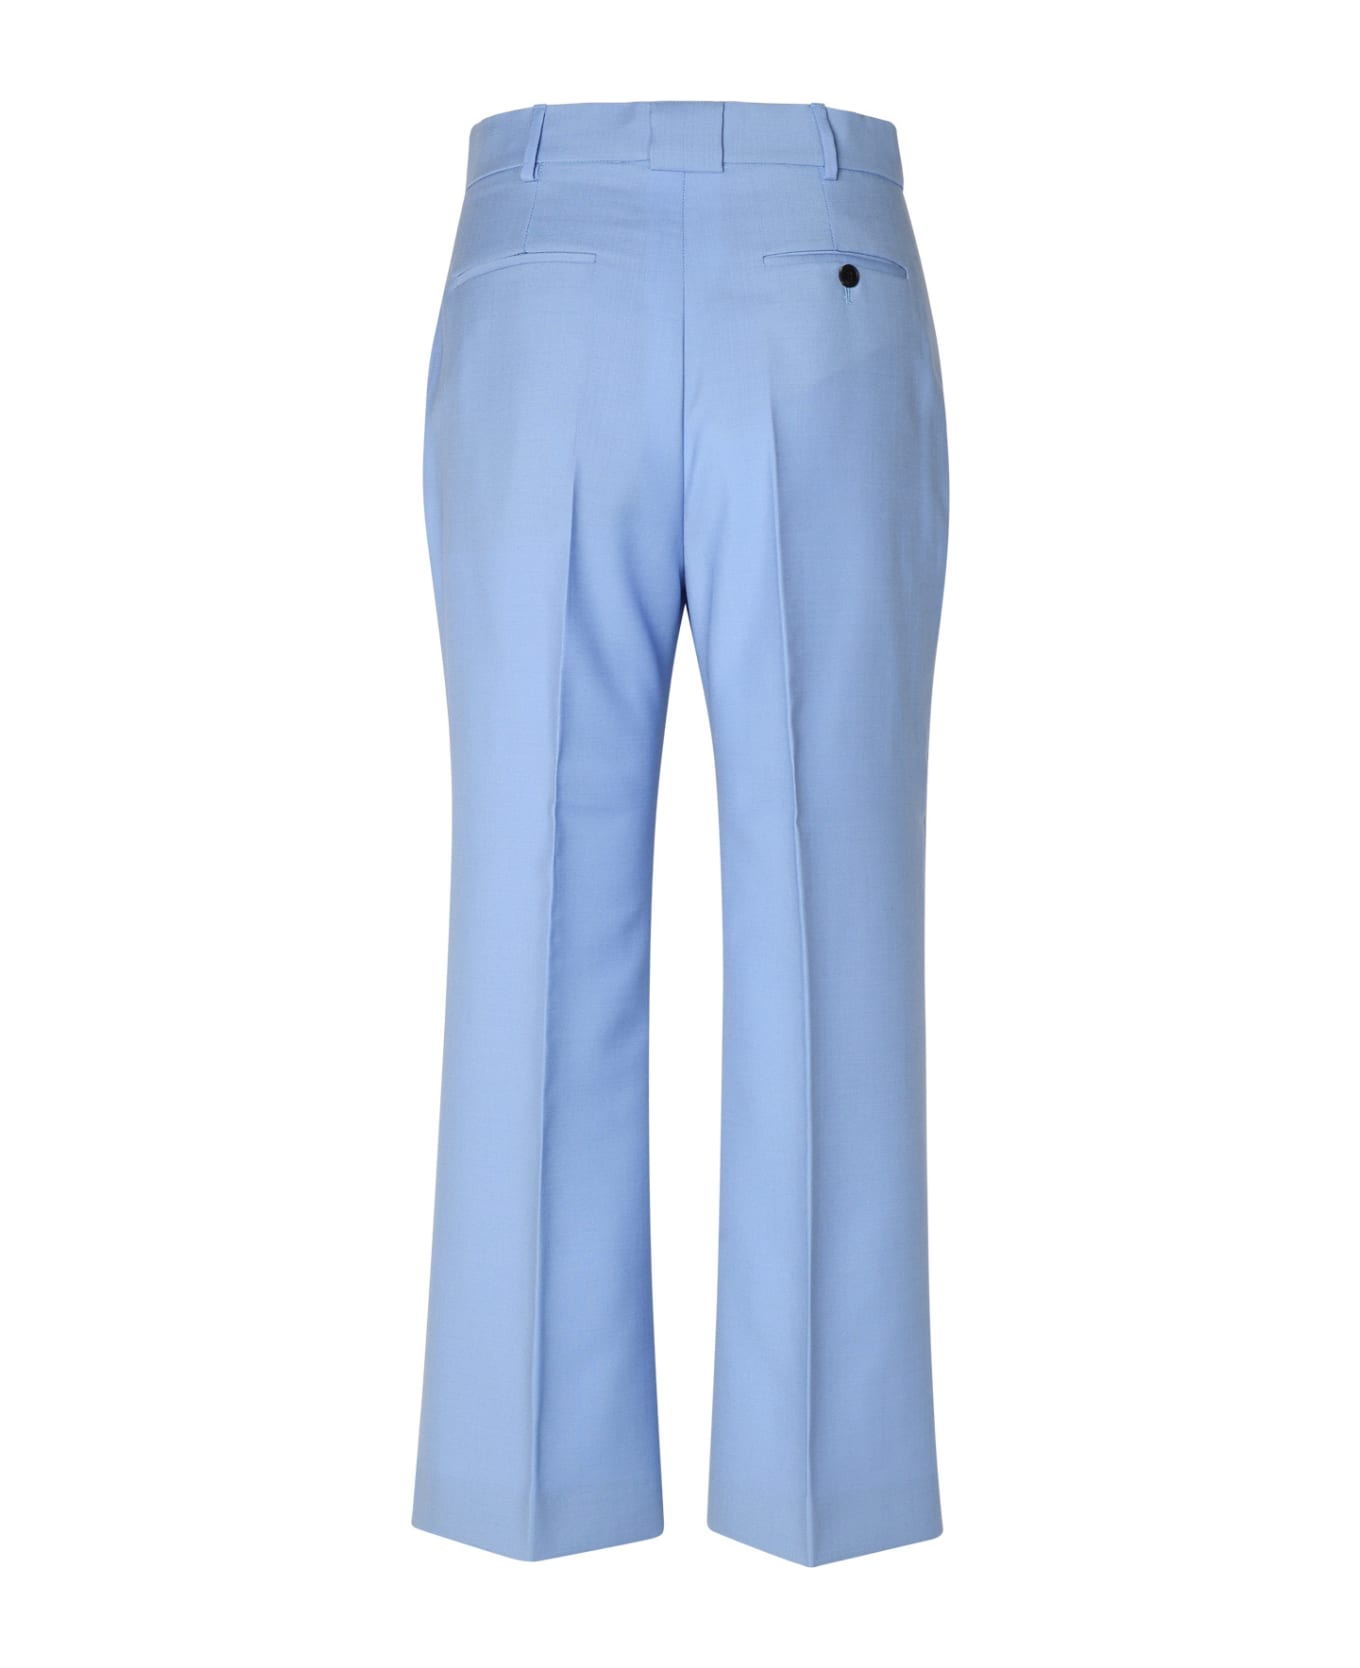 Lanvin Light Blue Virgin Wool Trousers - Light Blue